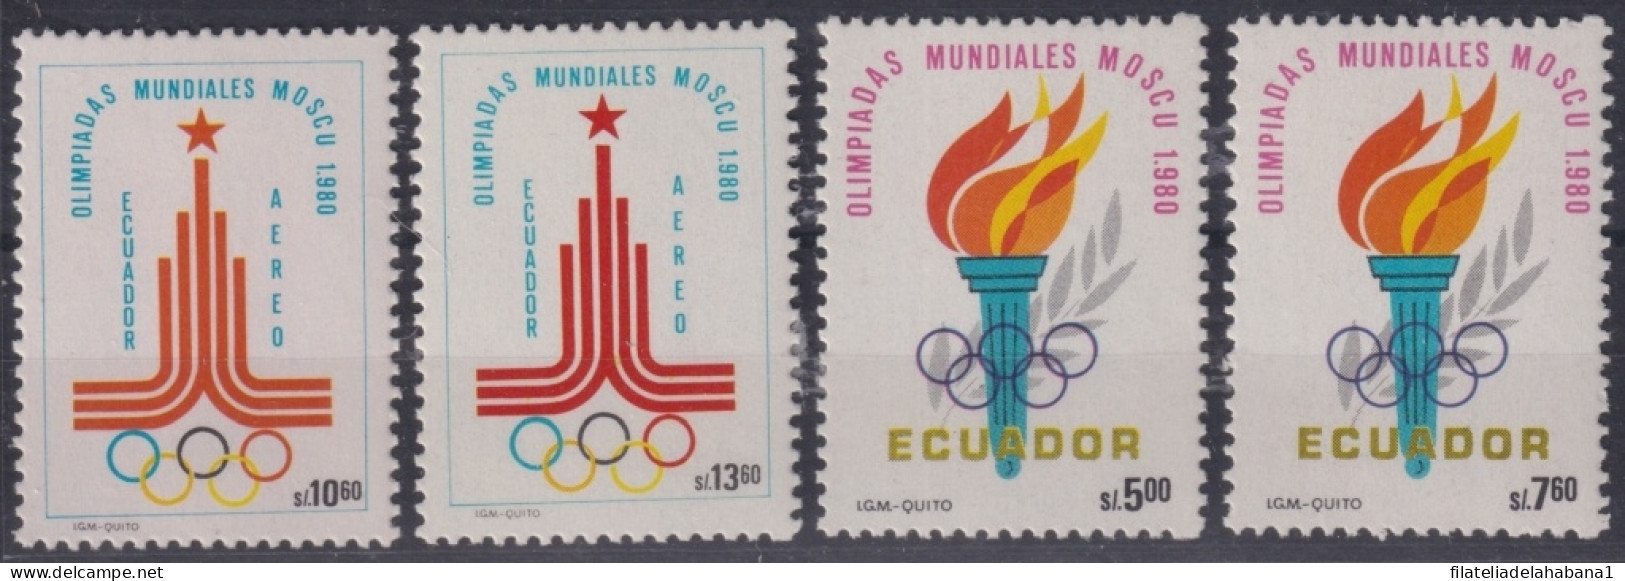 F-EX50102 ECUADOR MNH 1980 MOSCOW OLYMPIC GAMES.            - Sommer 1980: Moskau